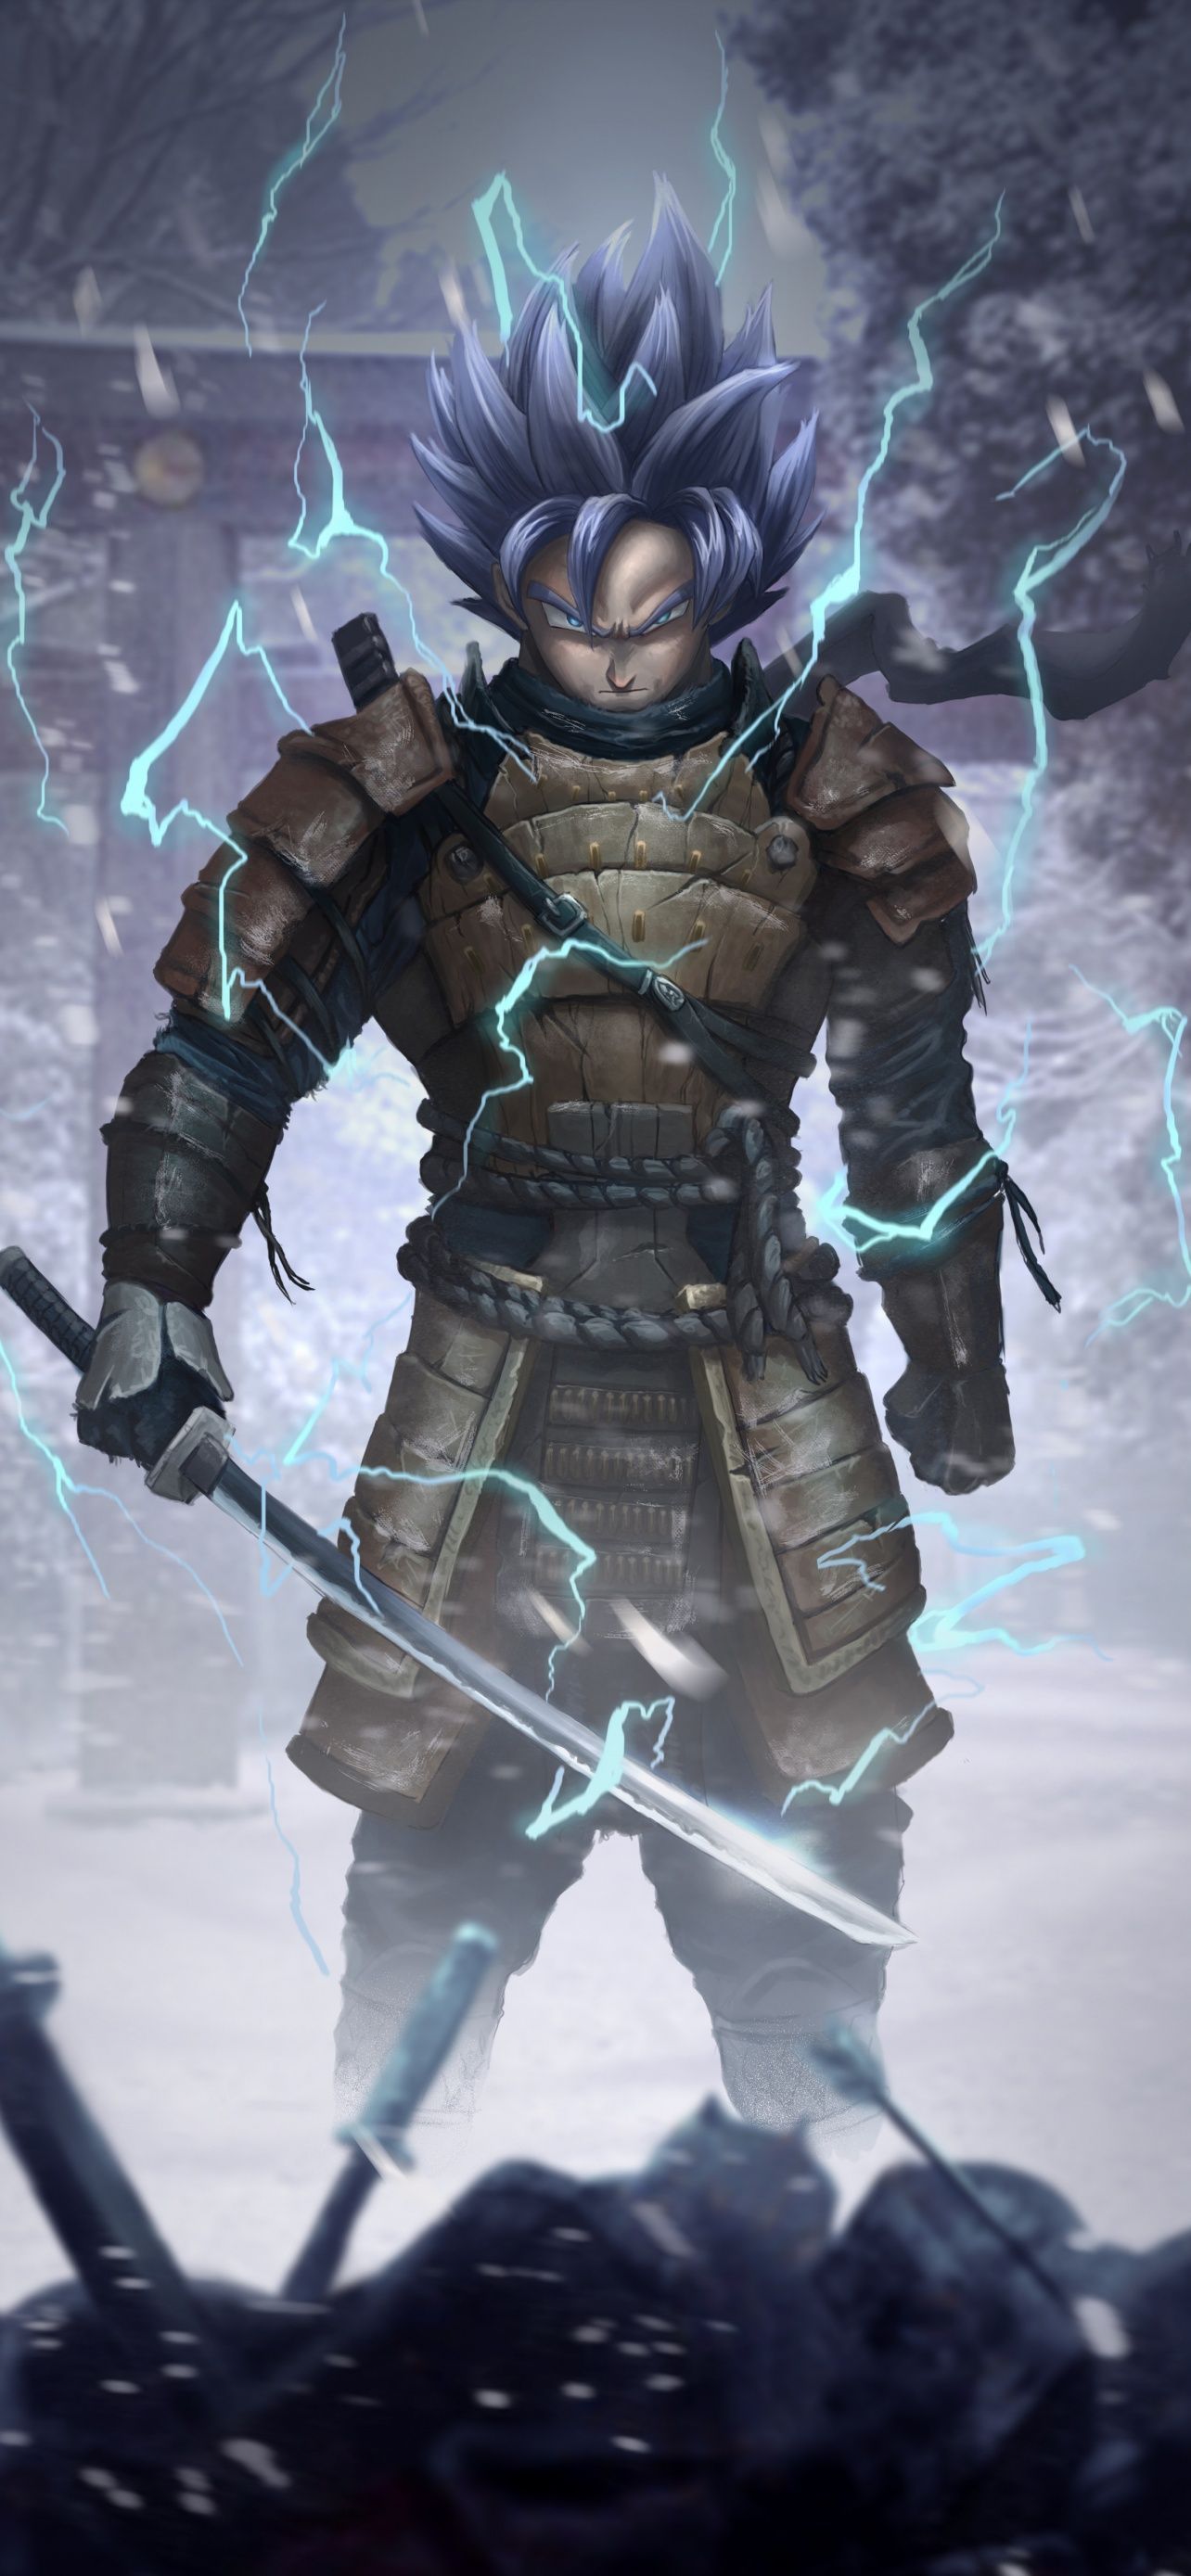 A samurai with blue hair holding a sword with lightning around him - Samurai